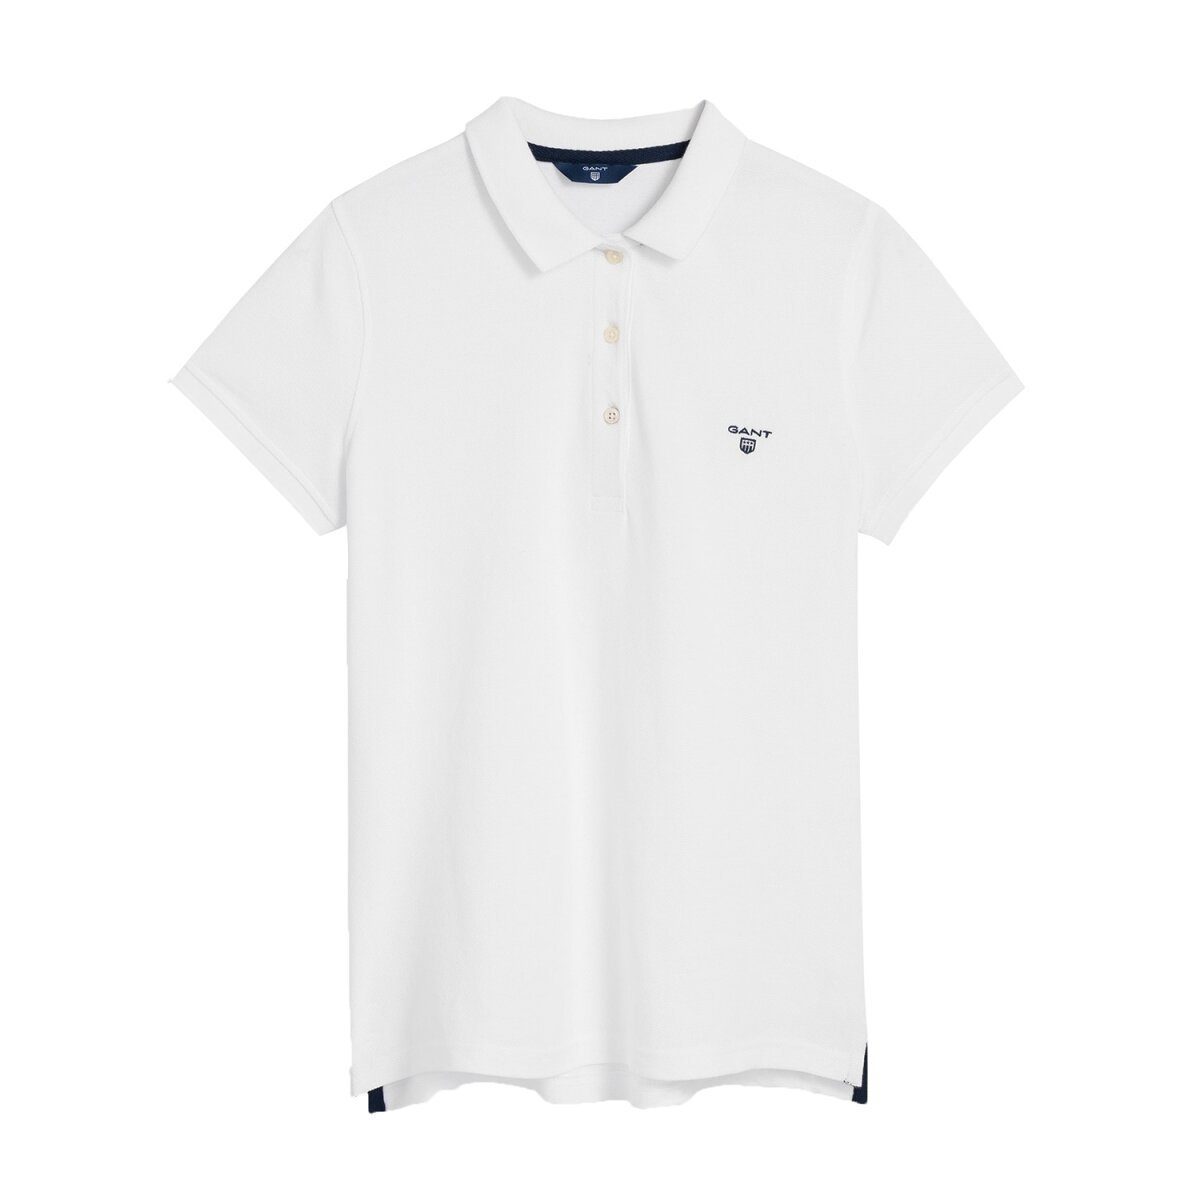 Pique, Gant Halbarm - Weiß Poloshirt Summer T-Shirt Damen MD.